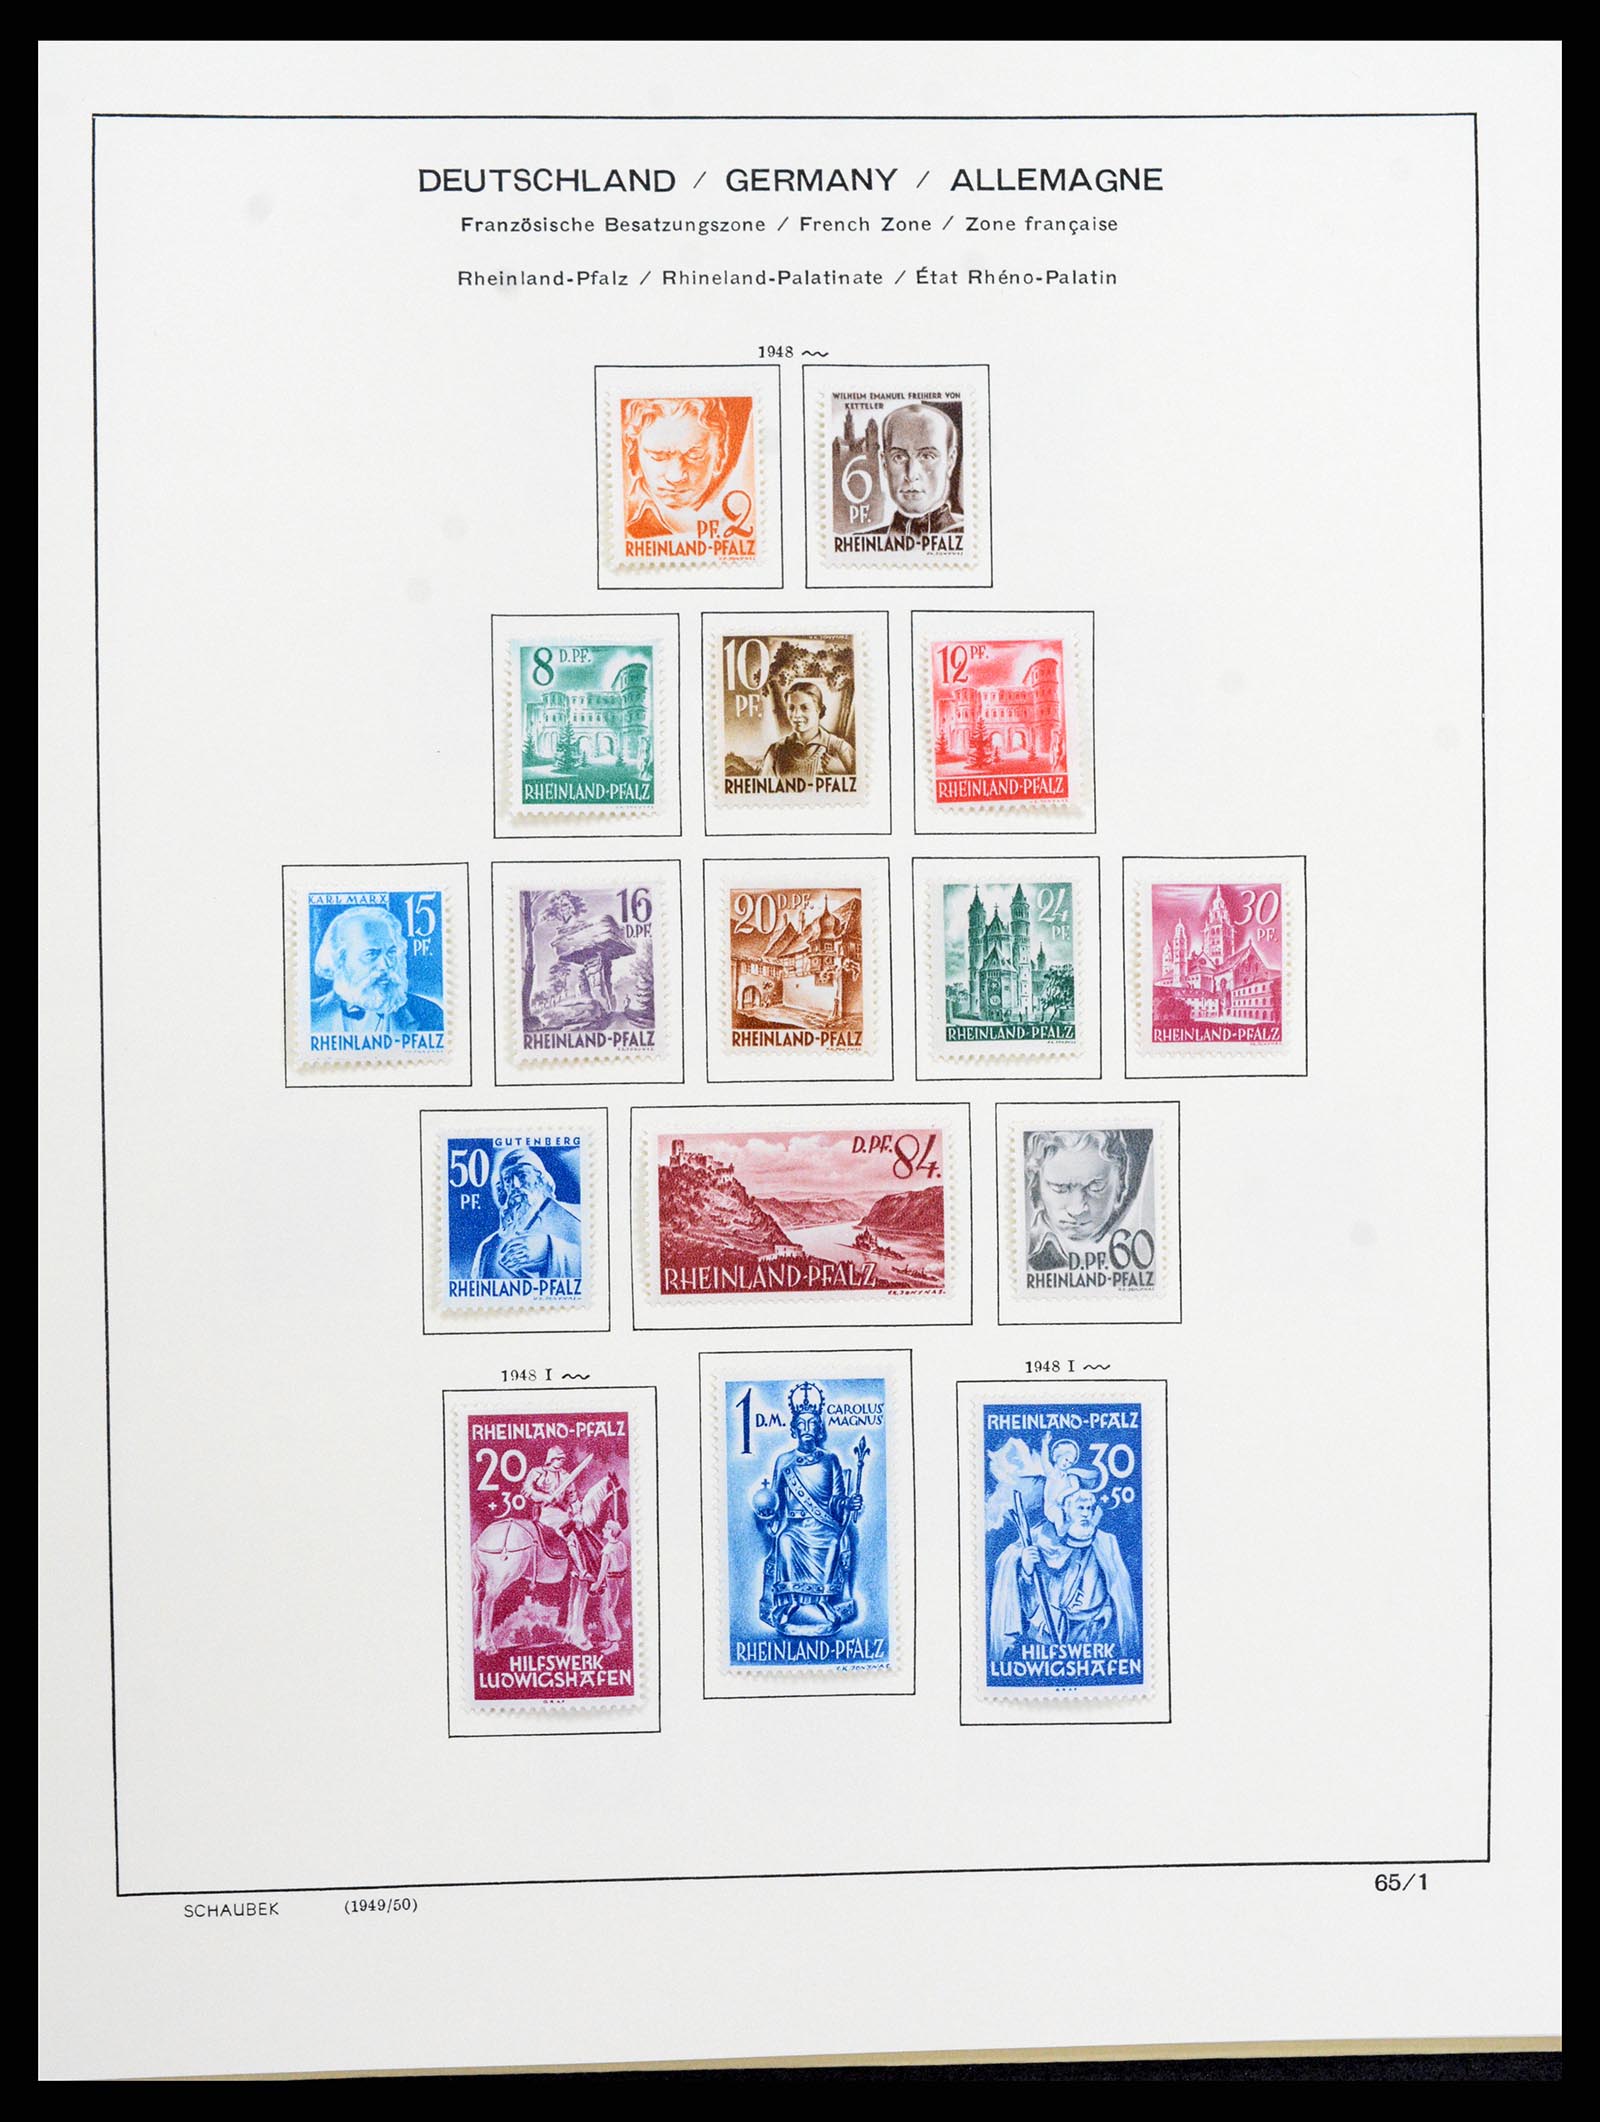 37645 065 - Stamp collection 37645 German Zones 1945-1949.